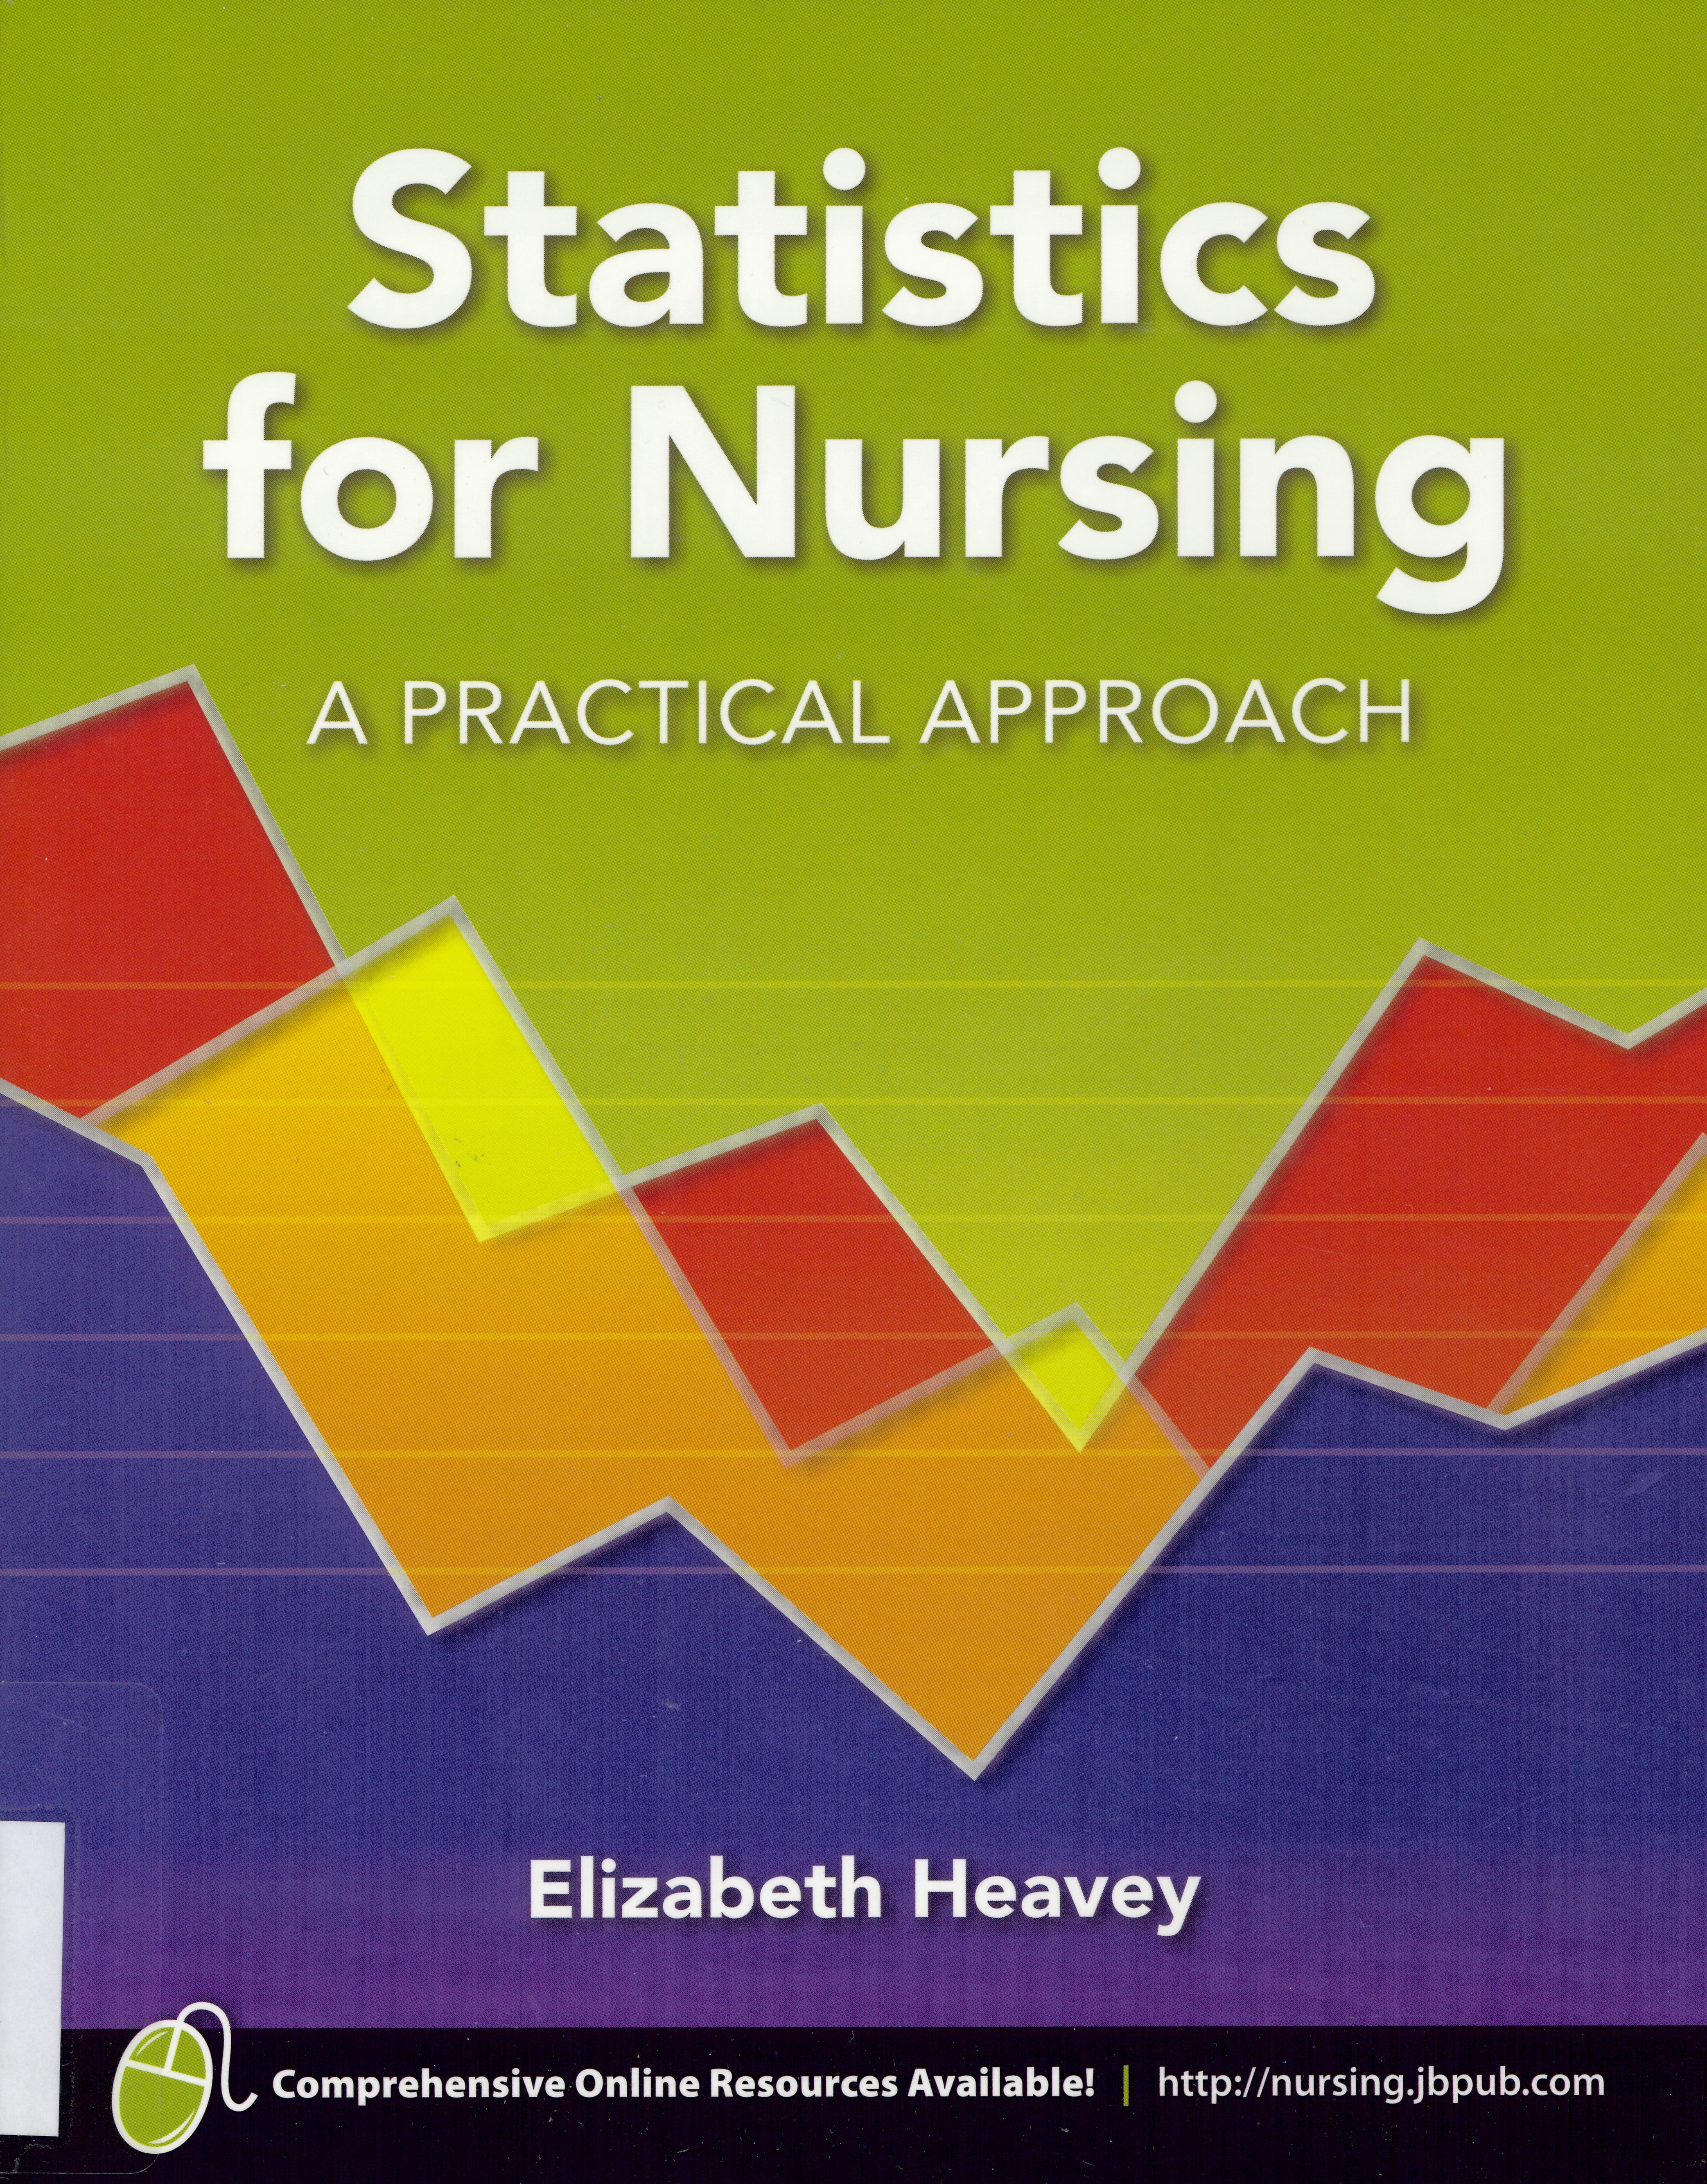 Statistics for nursing : a practical approach